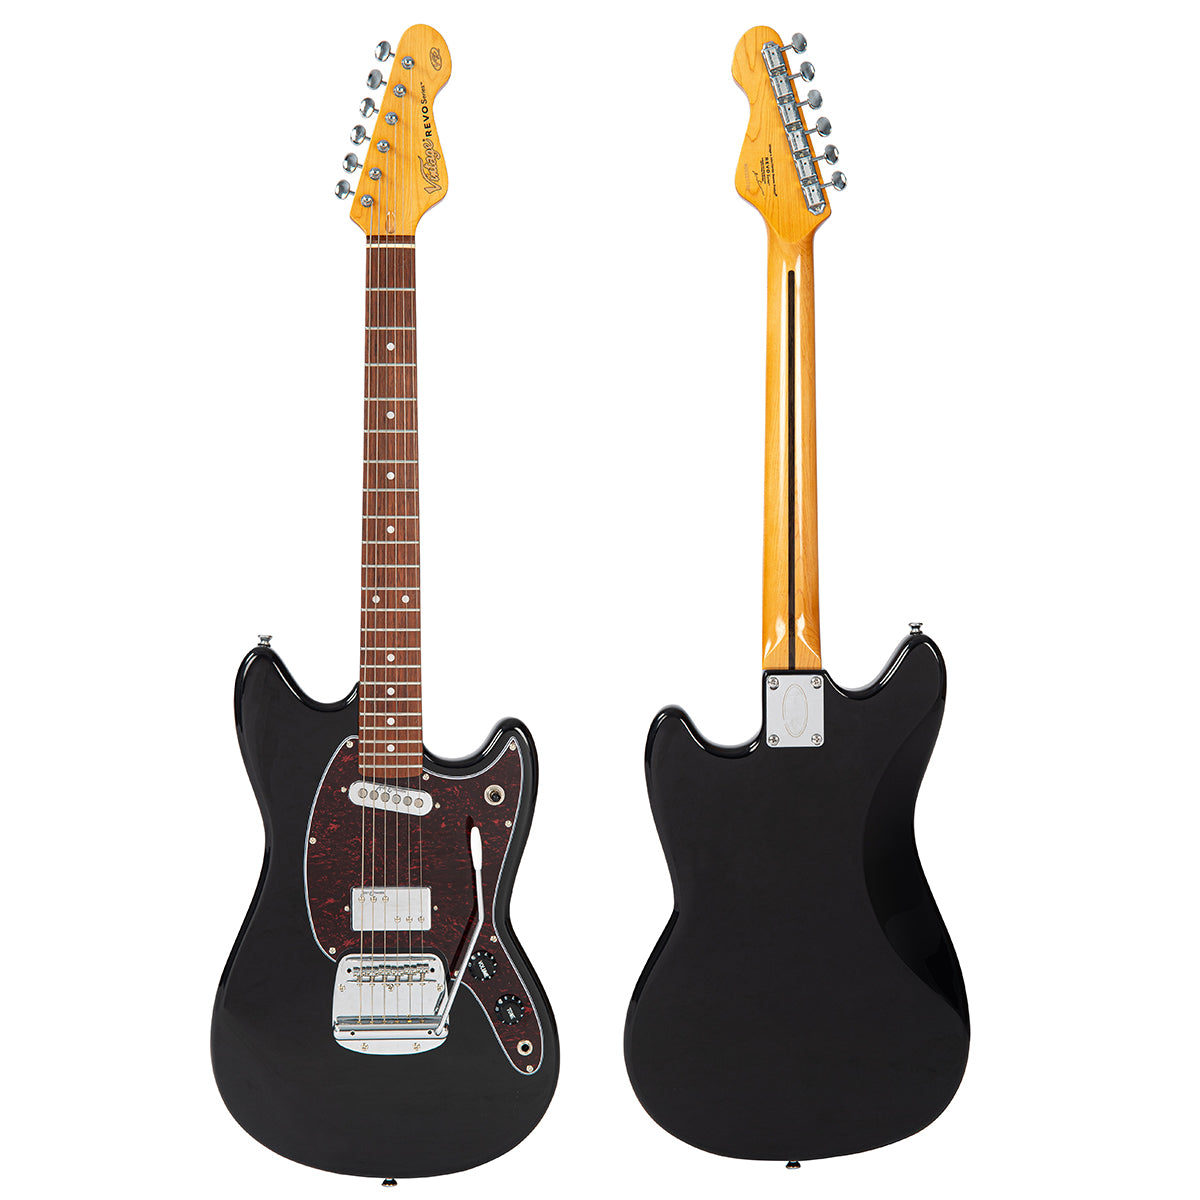 Vintage REVO Series 'Colt' HS Duo Electric Guitar ~ Boulevard Black, Electric Guitars for sale at Richards Guitars.